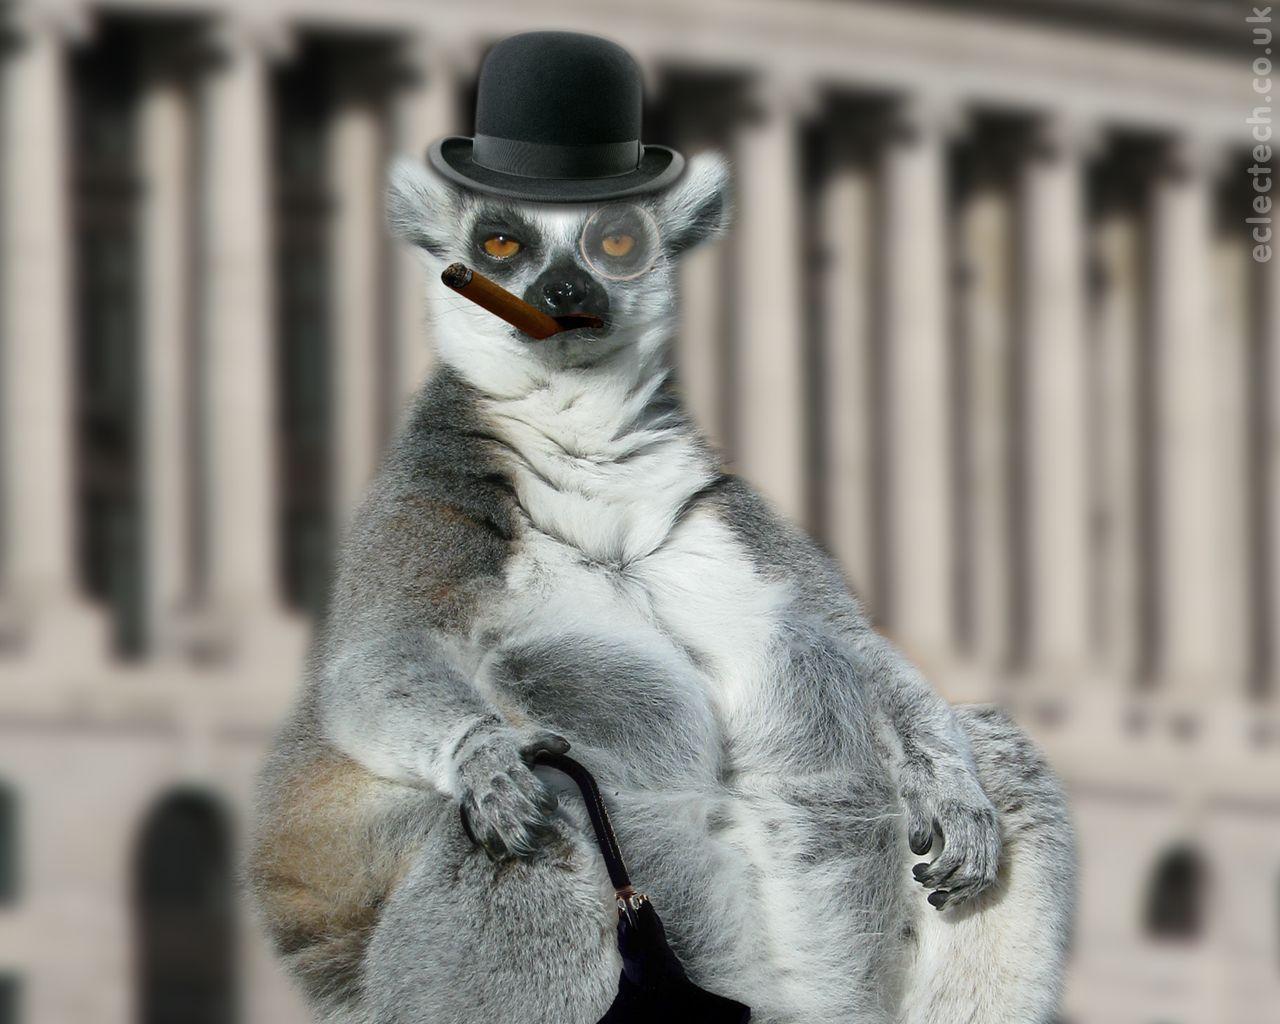 A grumpy lemur in bowler hat